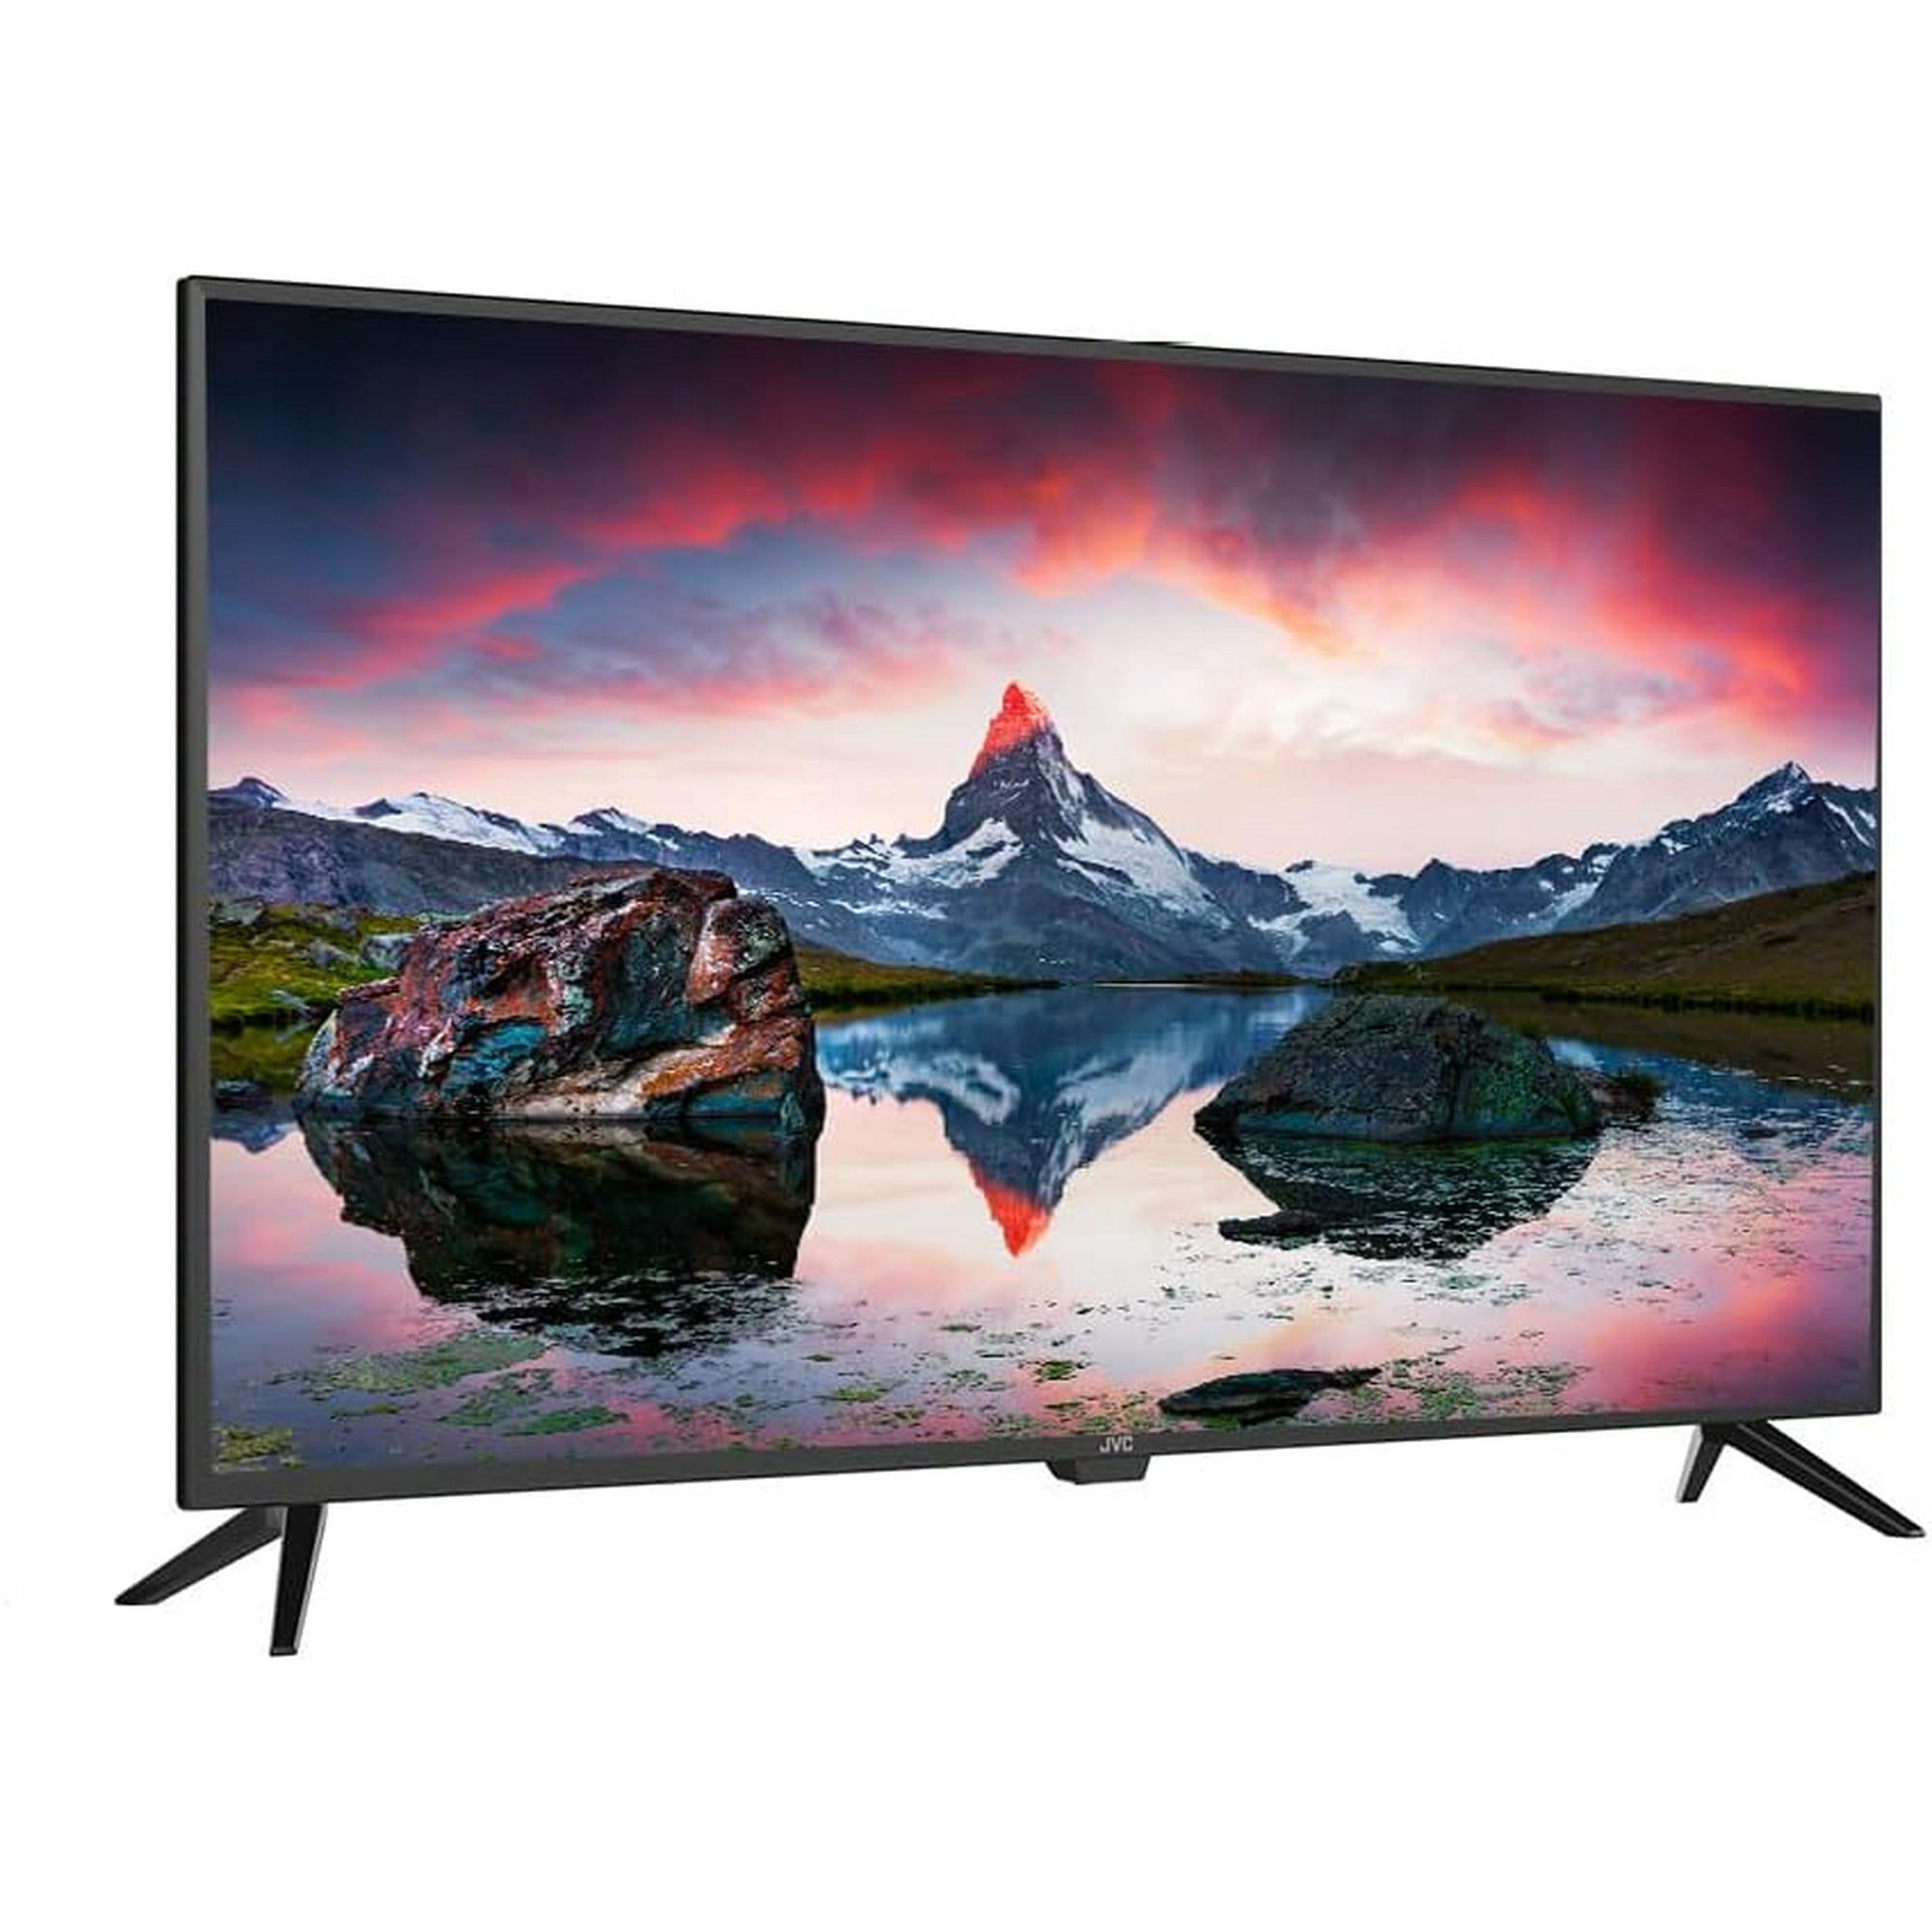 Pantalla JVC 40 Pulgadas HD Smart TV por menos de $5,000 en